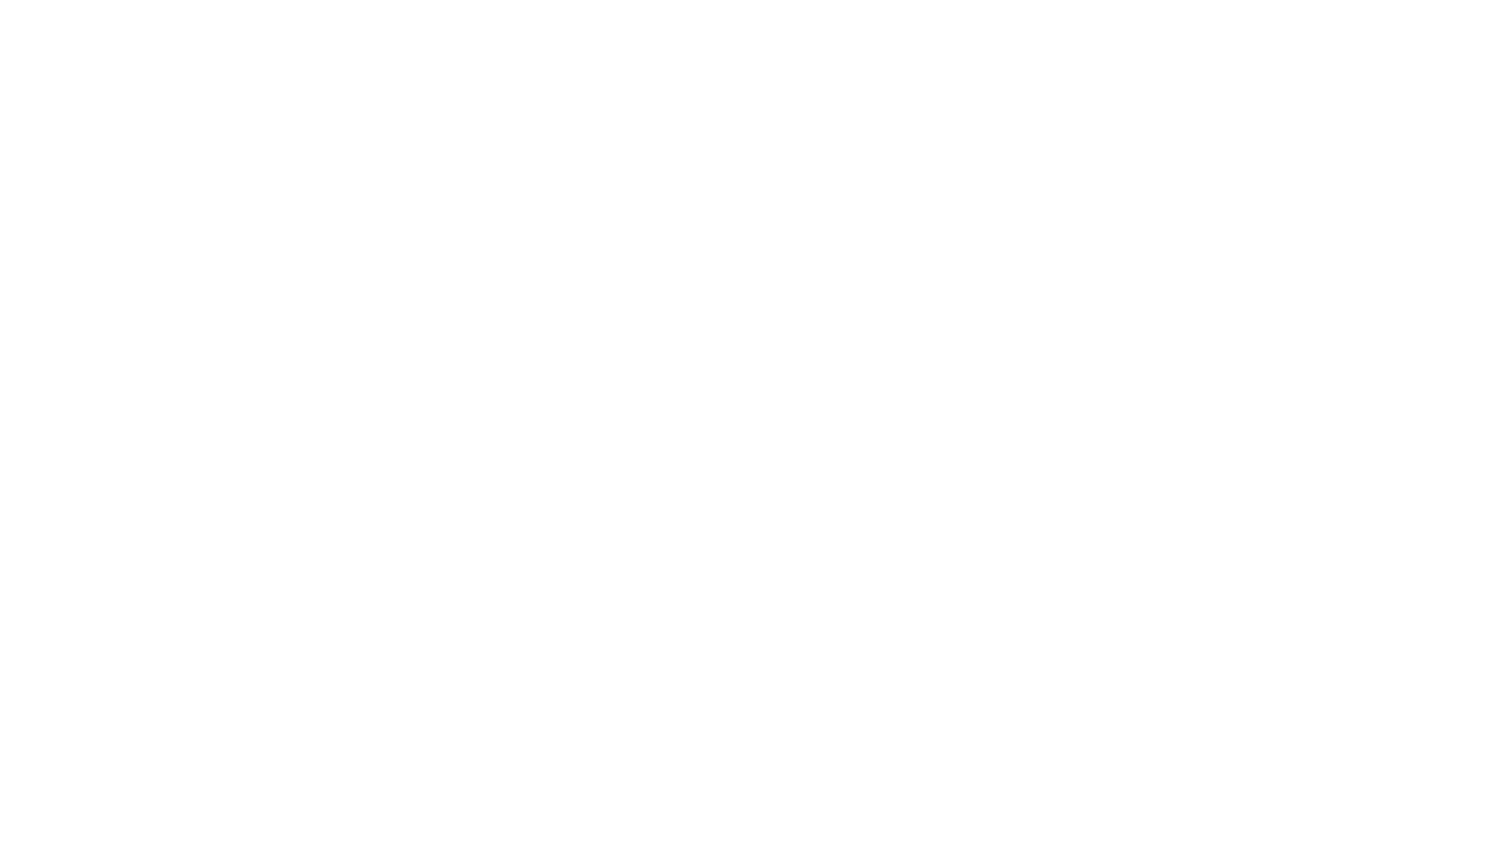 Roger Norton Tree Surgeons